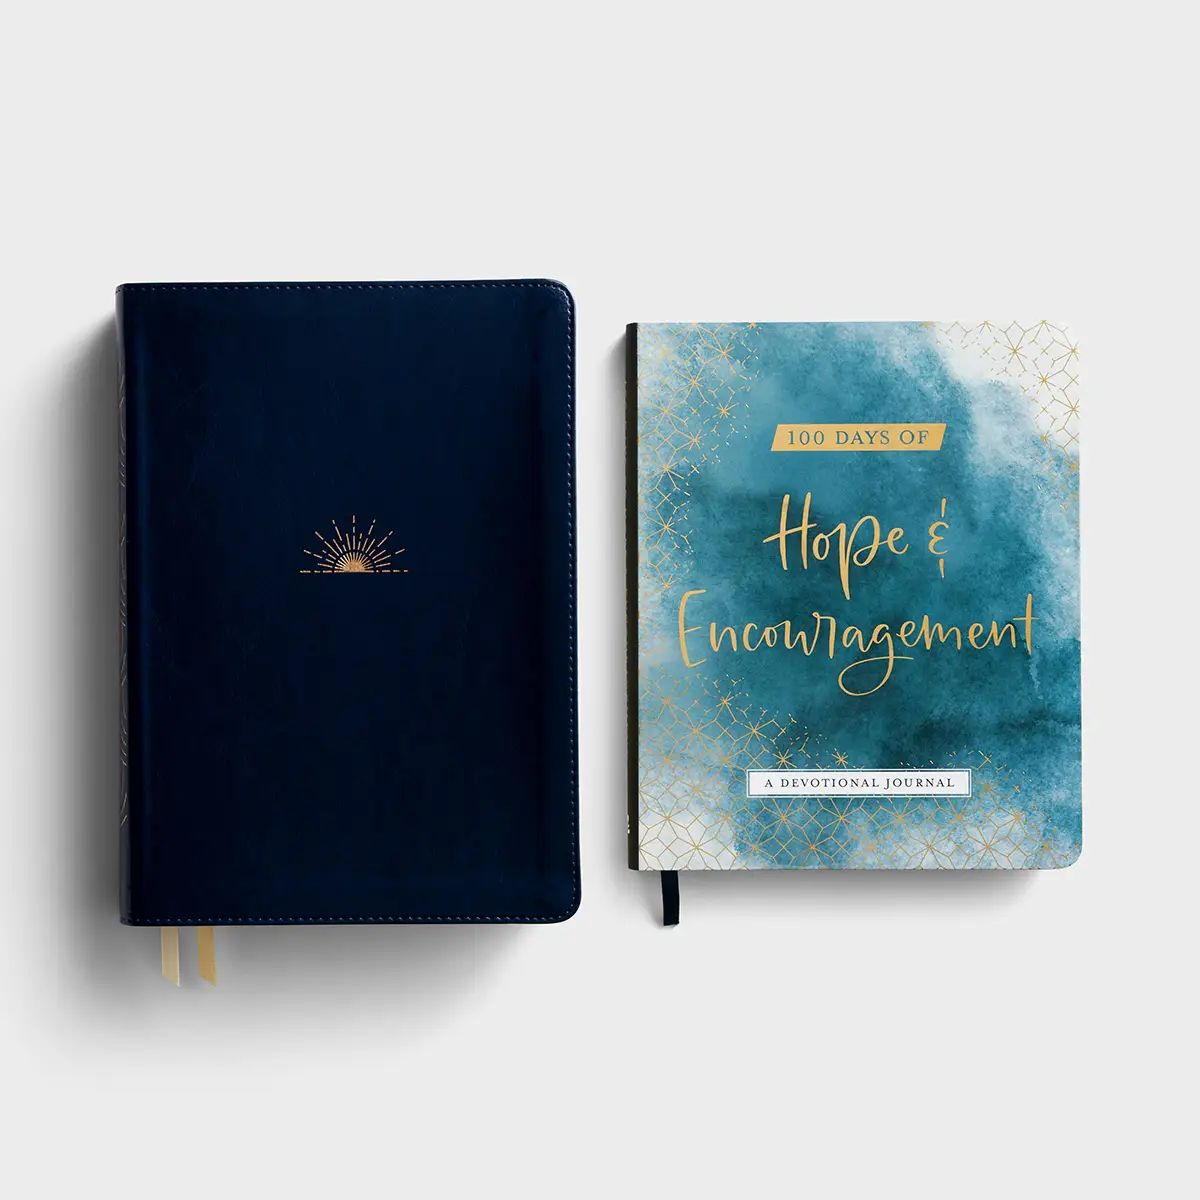 Hope & Encouragement - Bible and Devotional Journal - Gift Set | DaySpring